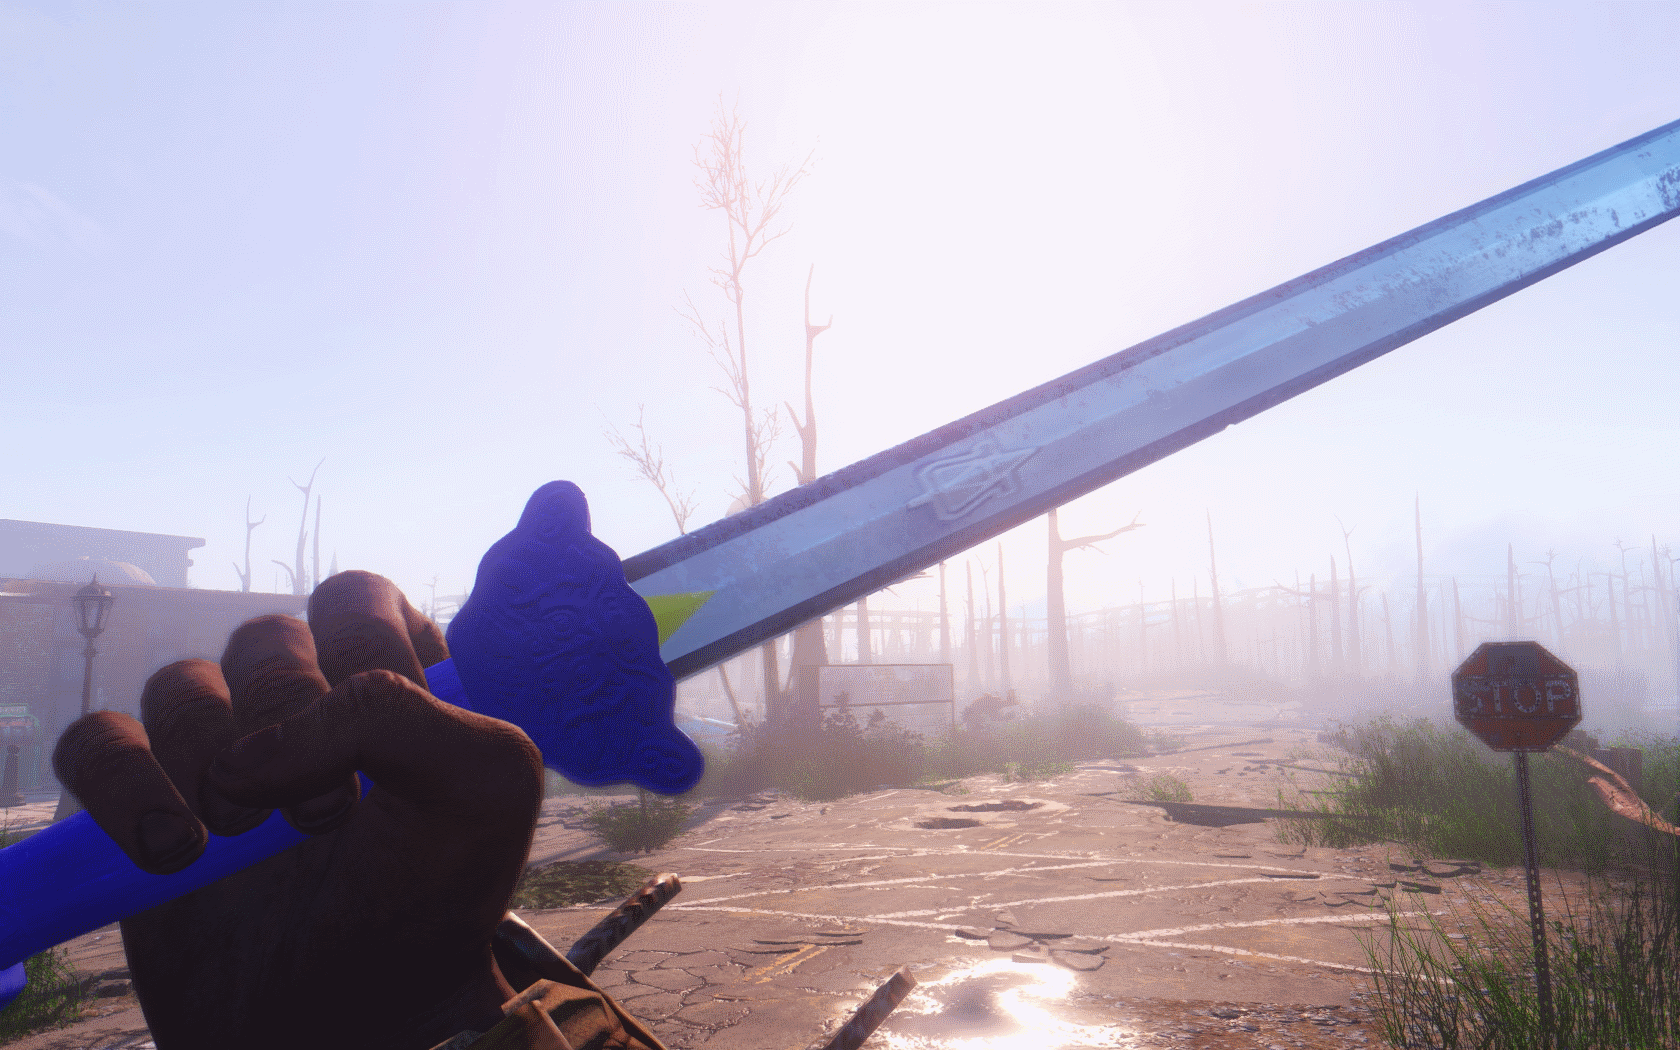 Мод Fallout 4 — Меч из The legend of Zelda (The Legend of Zelda Master Sword)